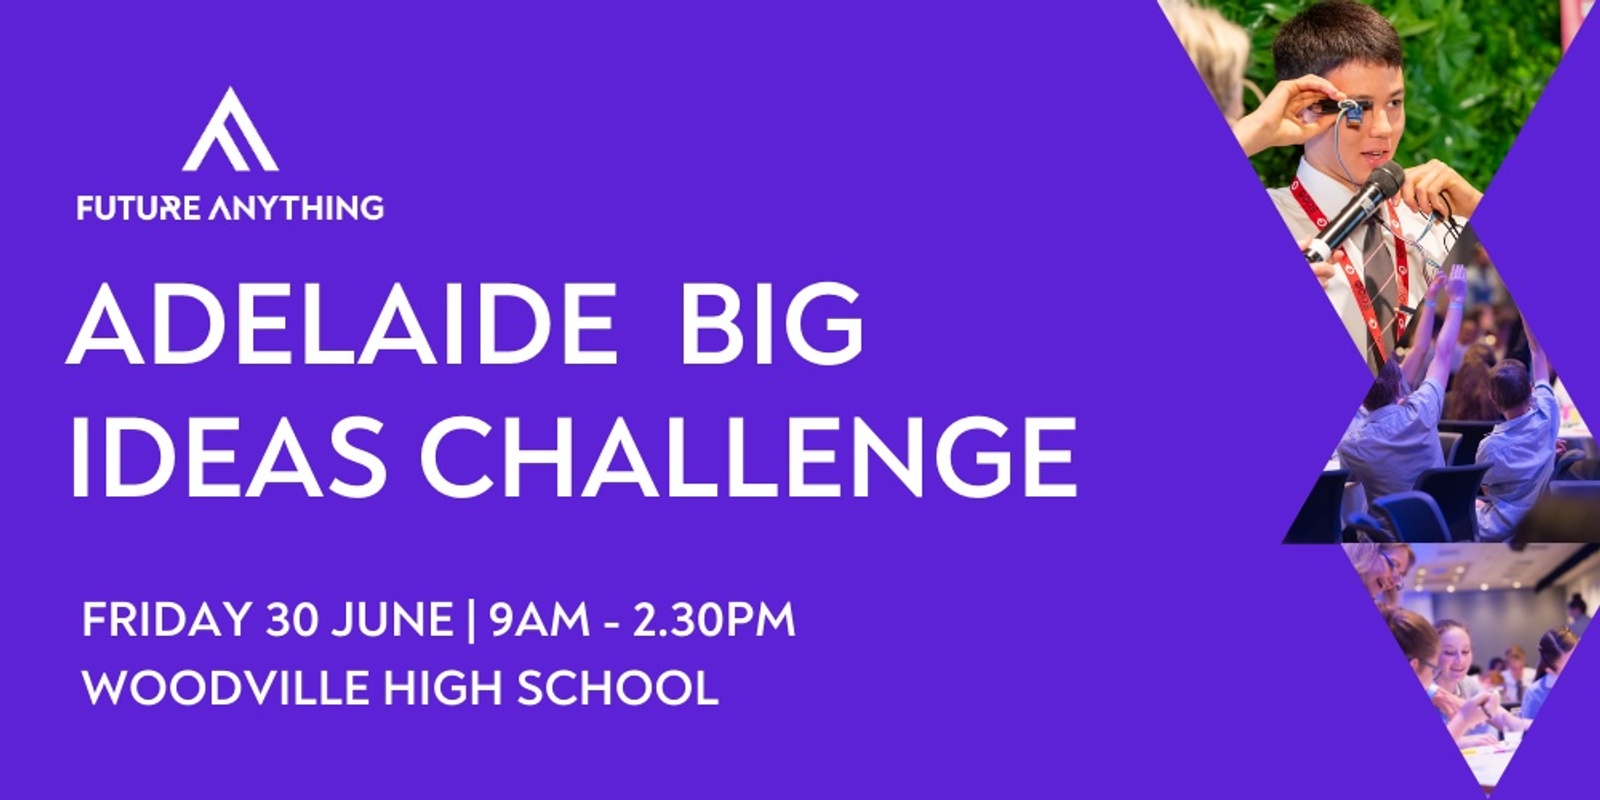 Banner image for Adelaide Big Ideas Challenge 2023